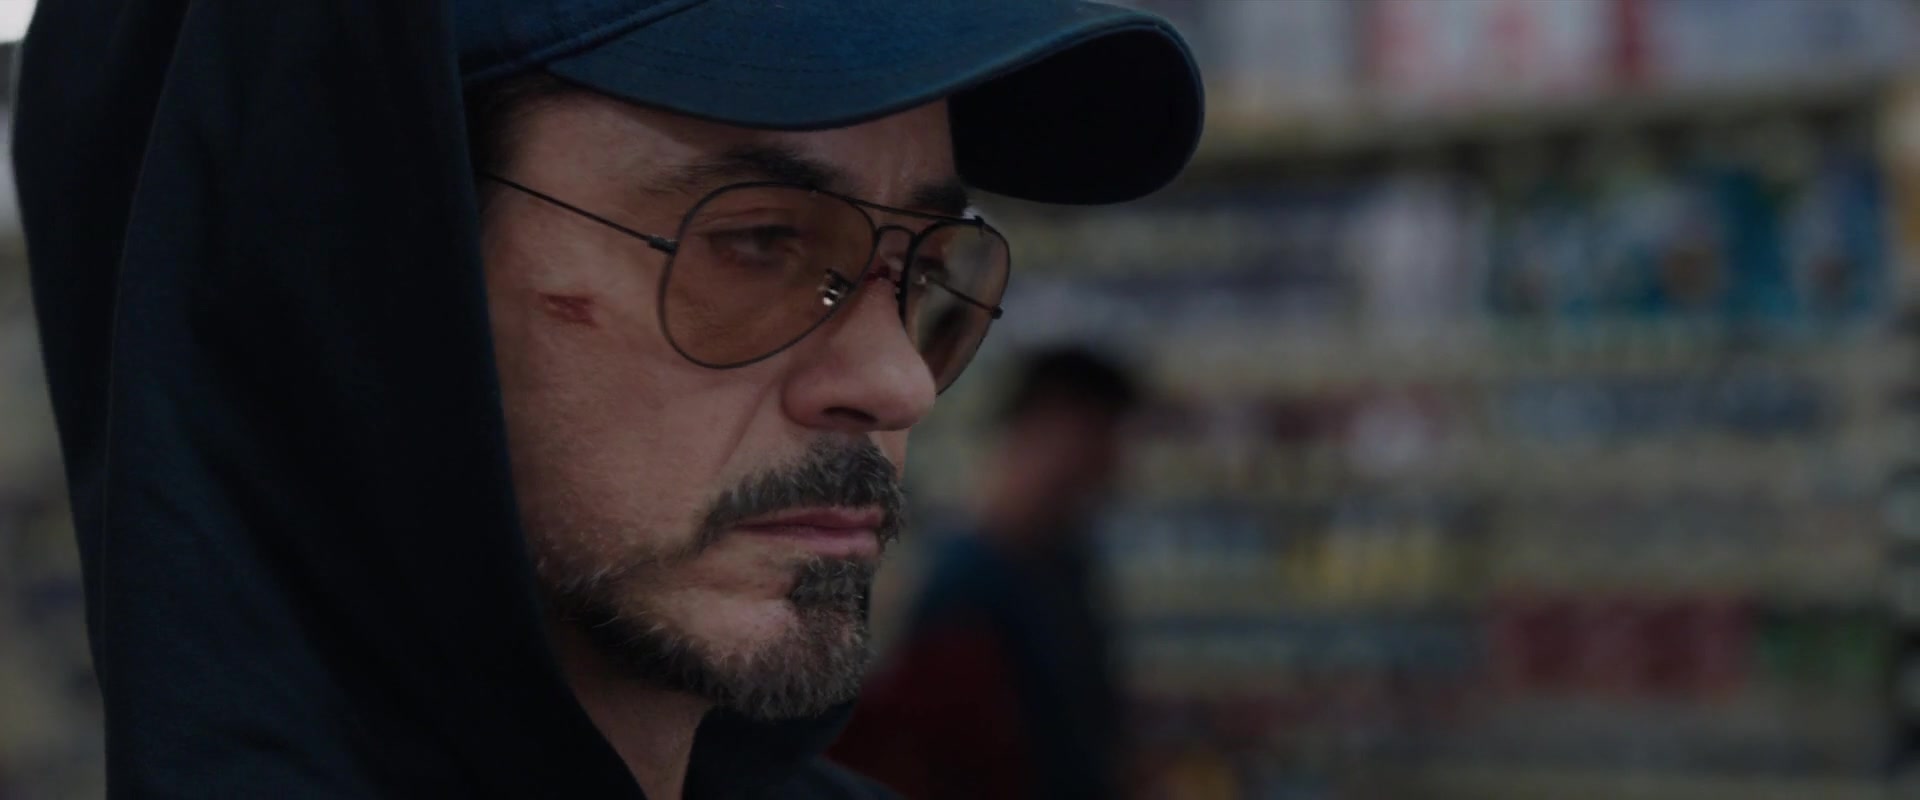 Tony Stark (Robert Downey Jr.) gears up to hunt down The Mandarin in Iron Man 3 (2013), Marvel Entertainment